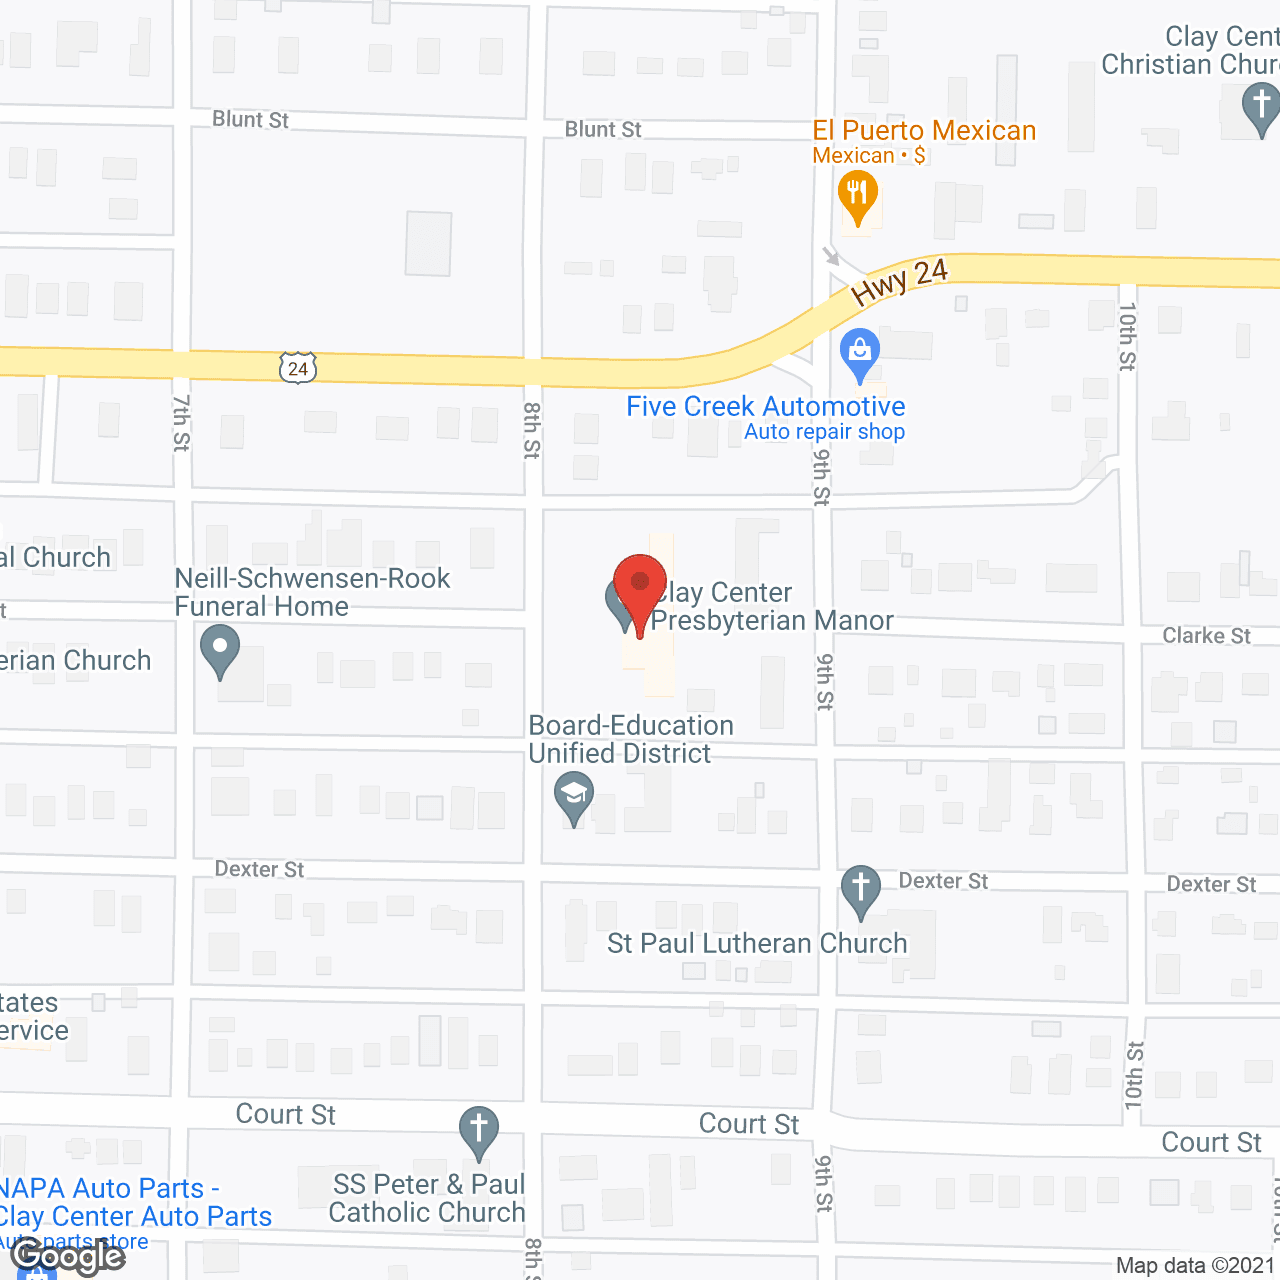 Clay Center Presbyterian Manor in google map